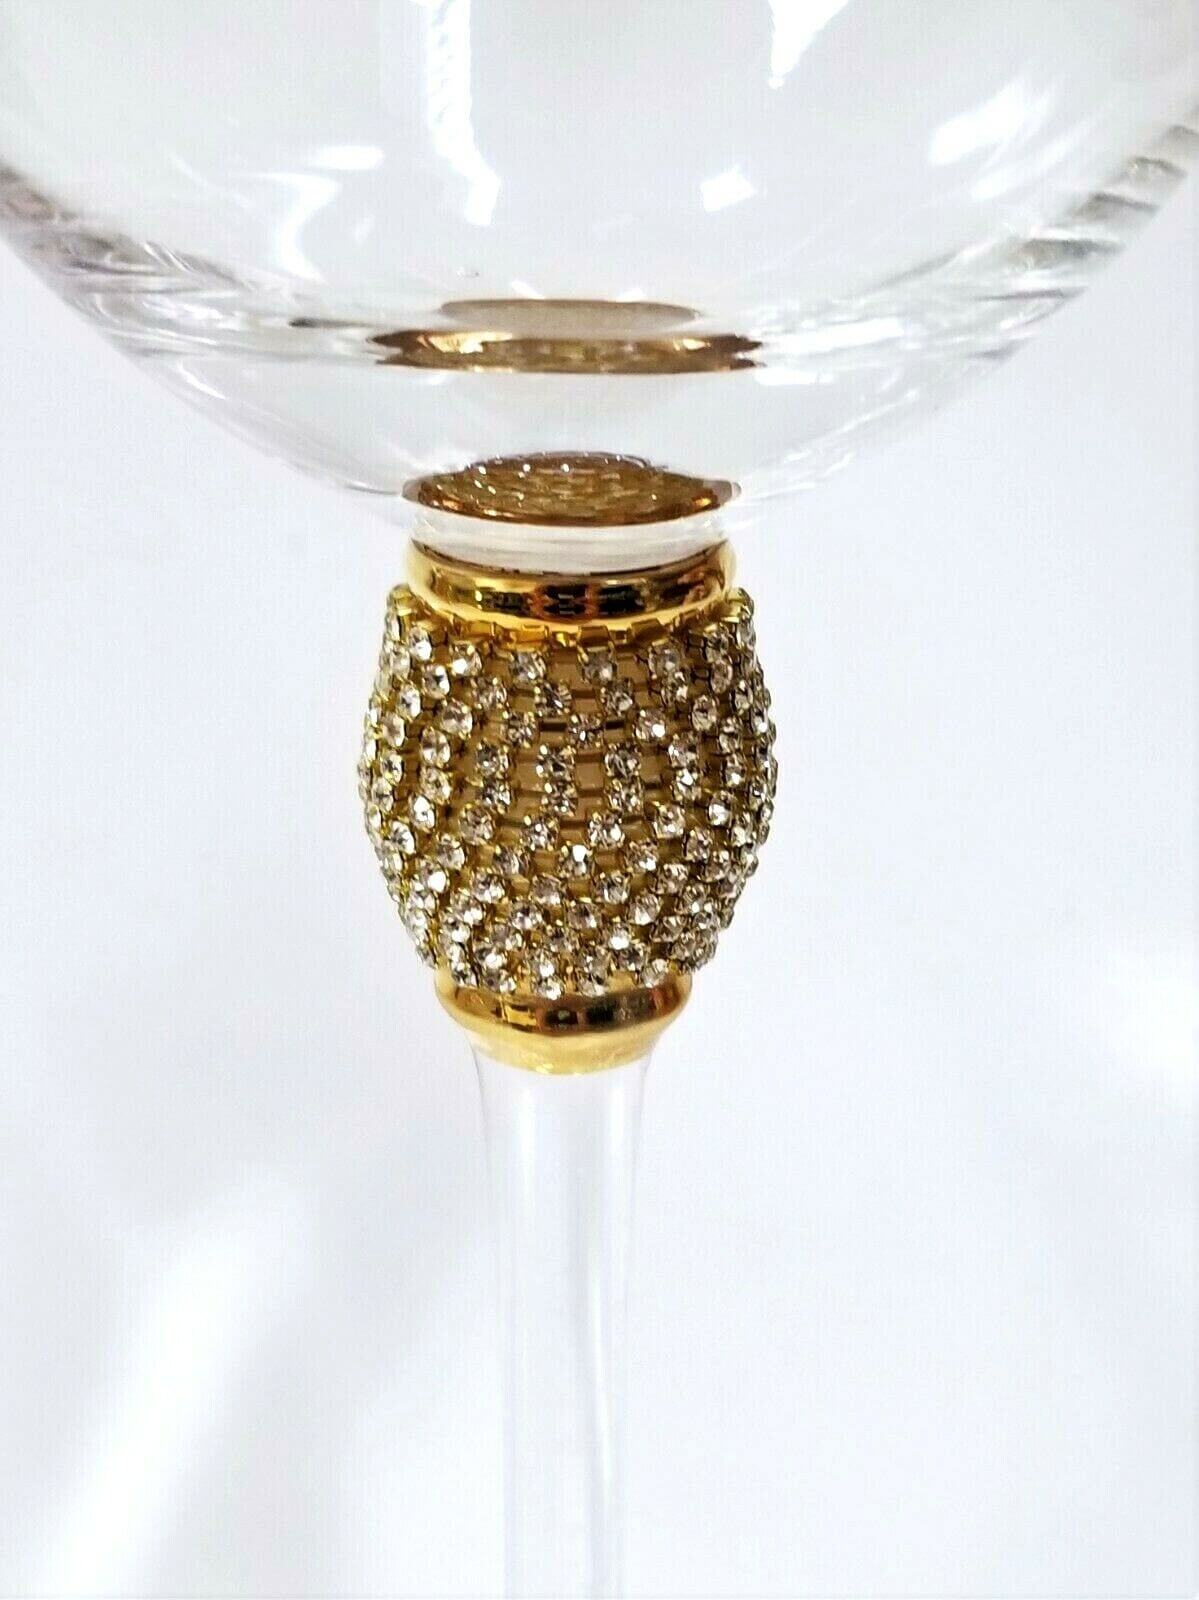 Gold Stem Wine Glasses Set of 2,500 ML melbify